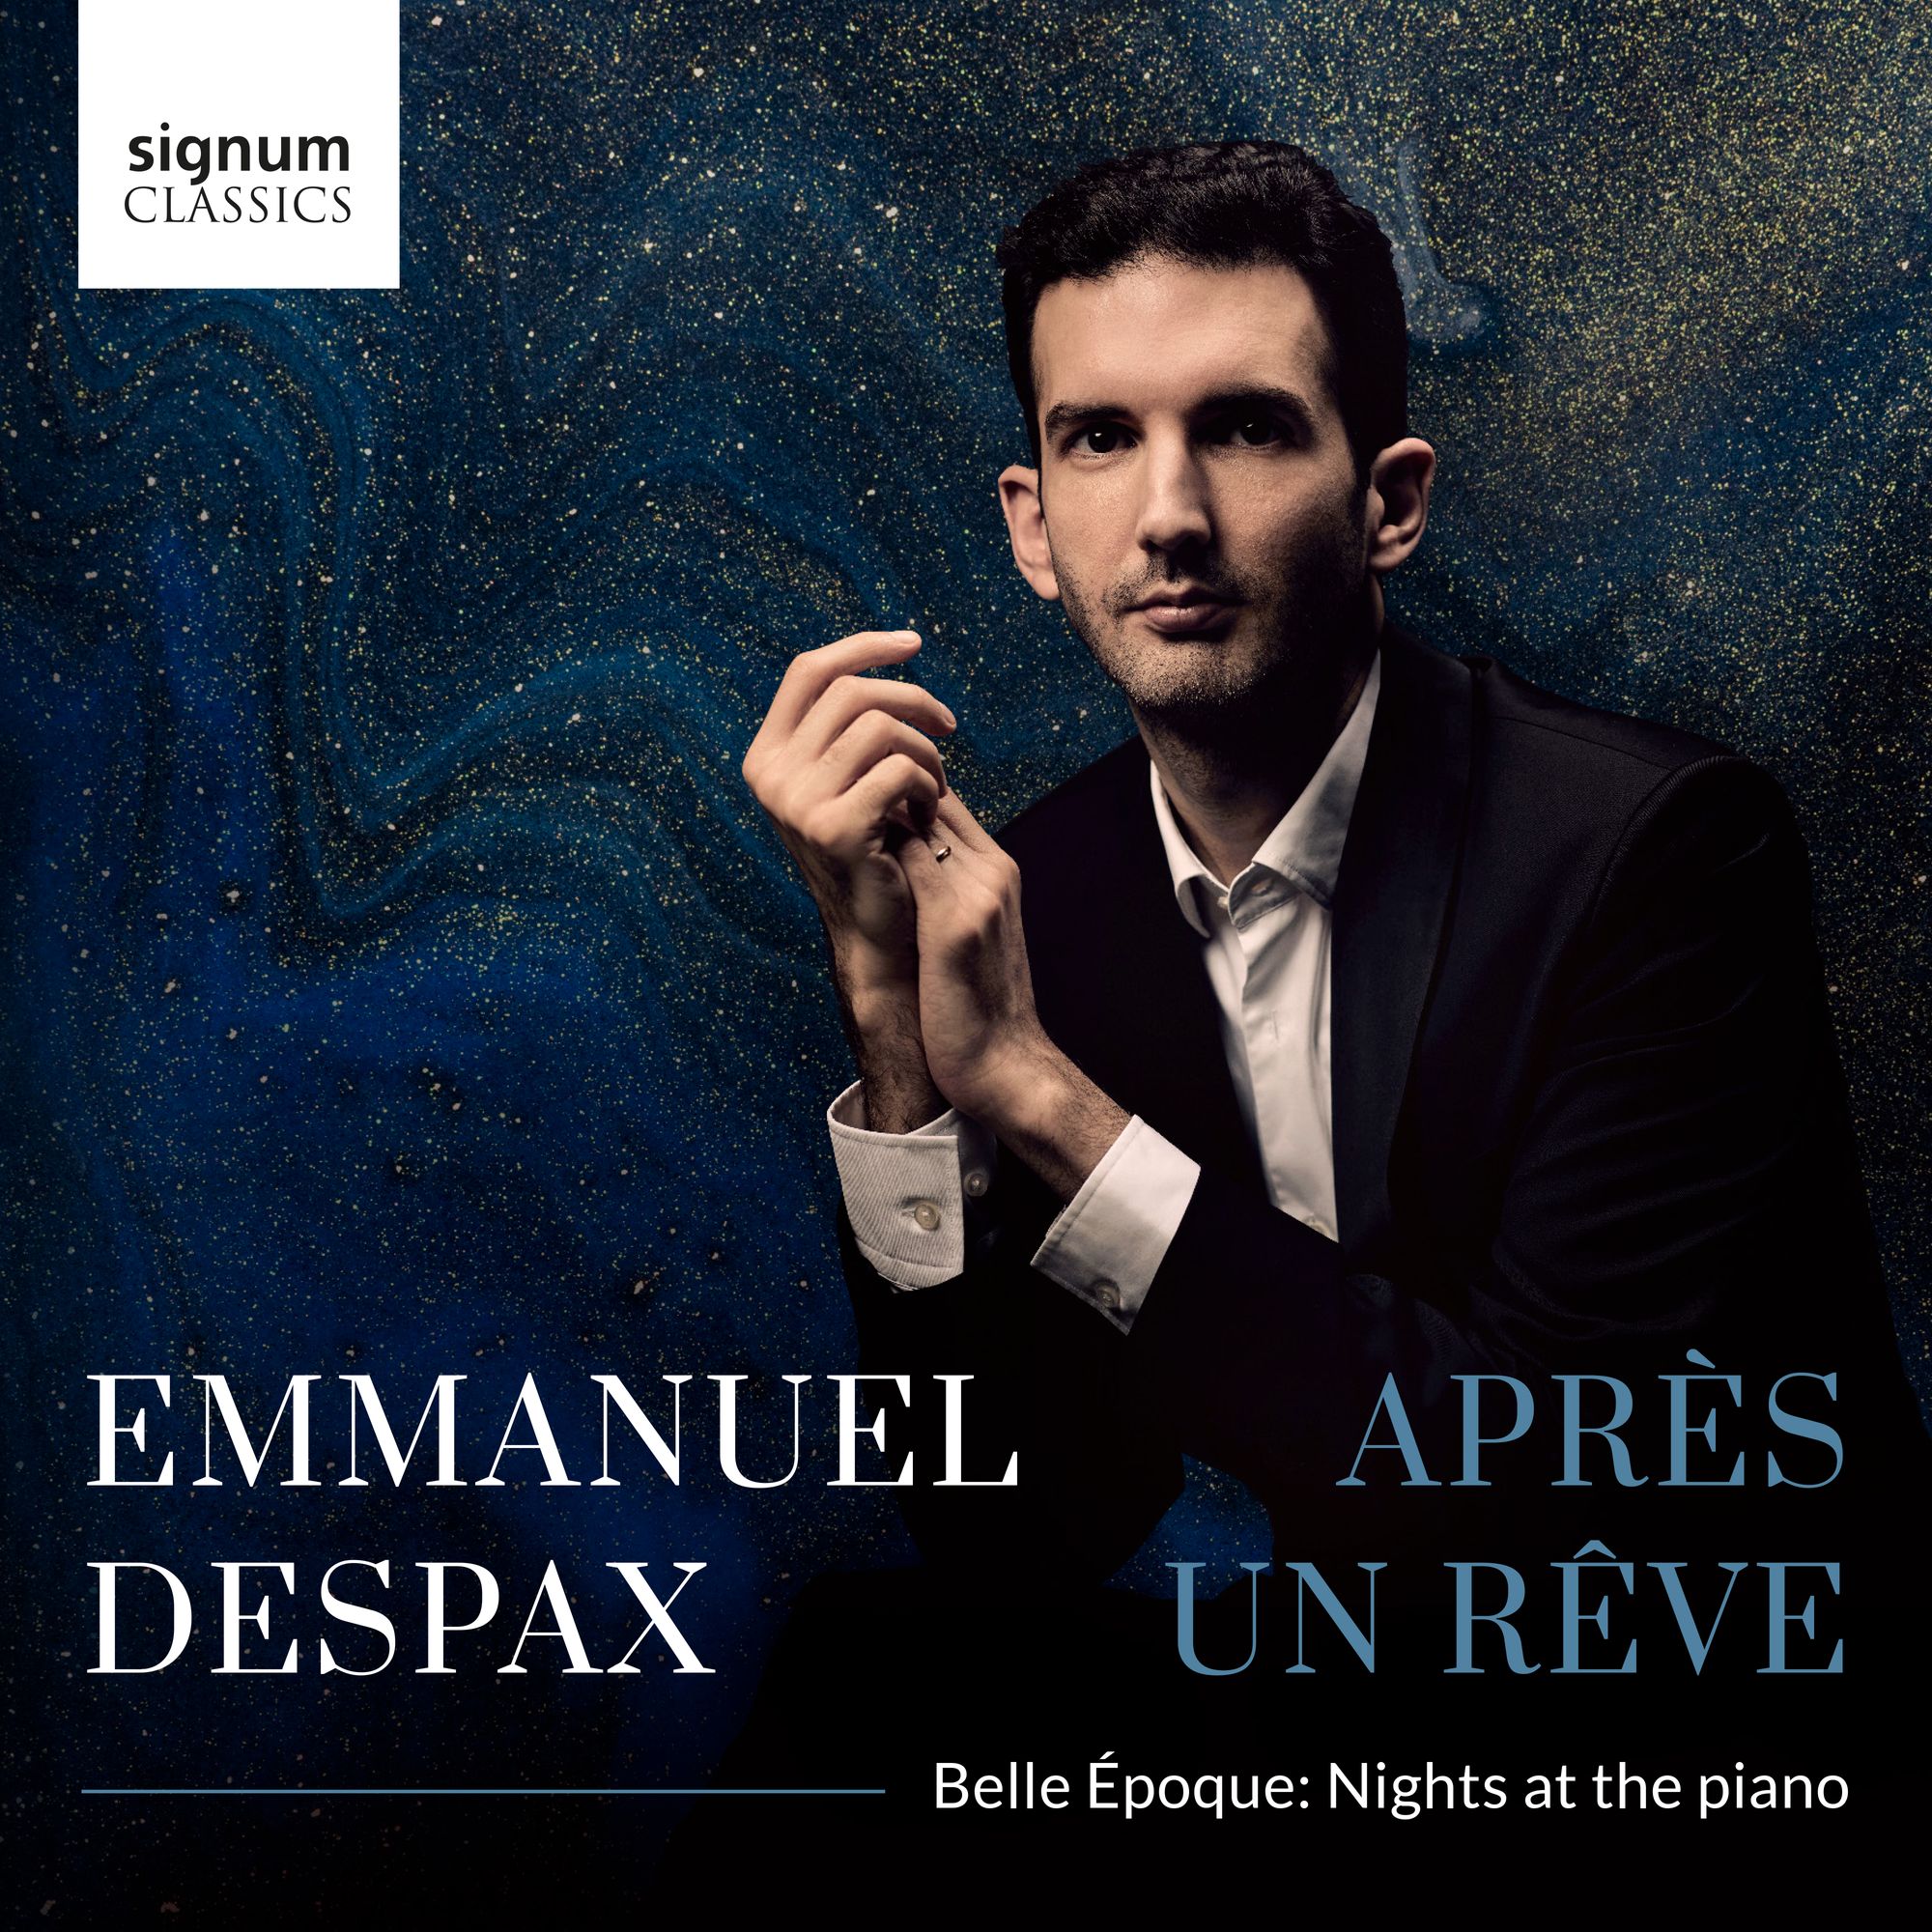 Après une rêve: Emmanuel Despax's new disc (and Wigmore concert)